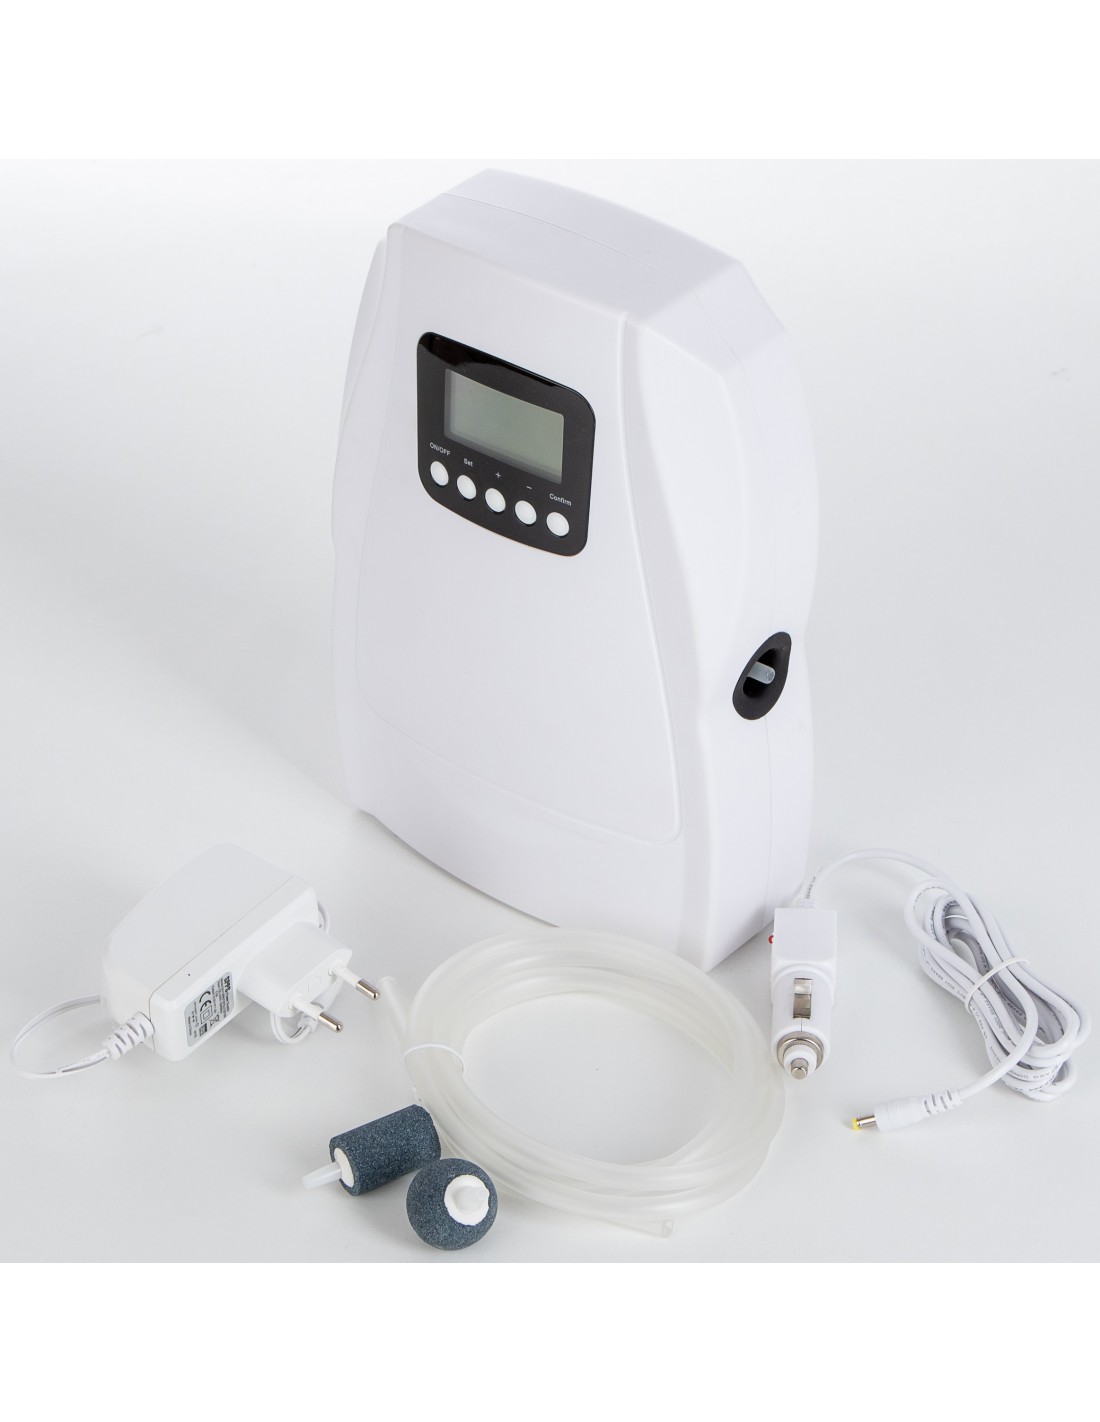 Generador de ozono para agua - Para purificadora de agua - Esterilizador